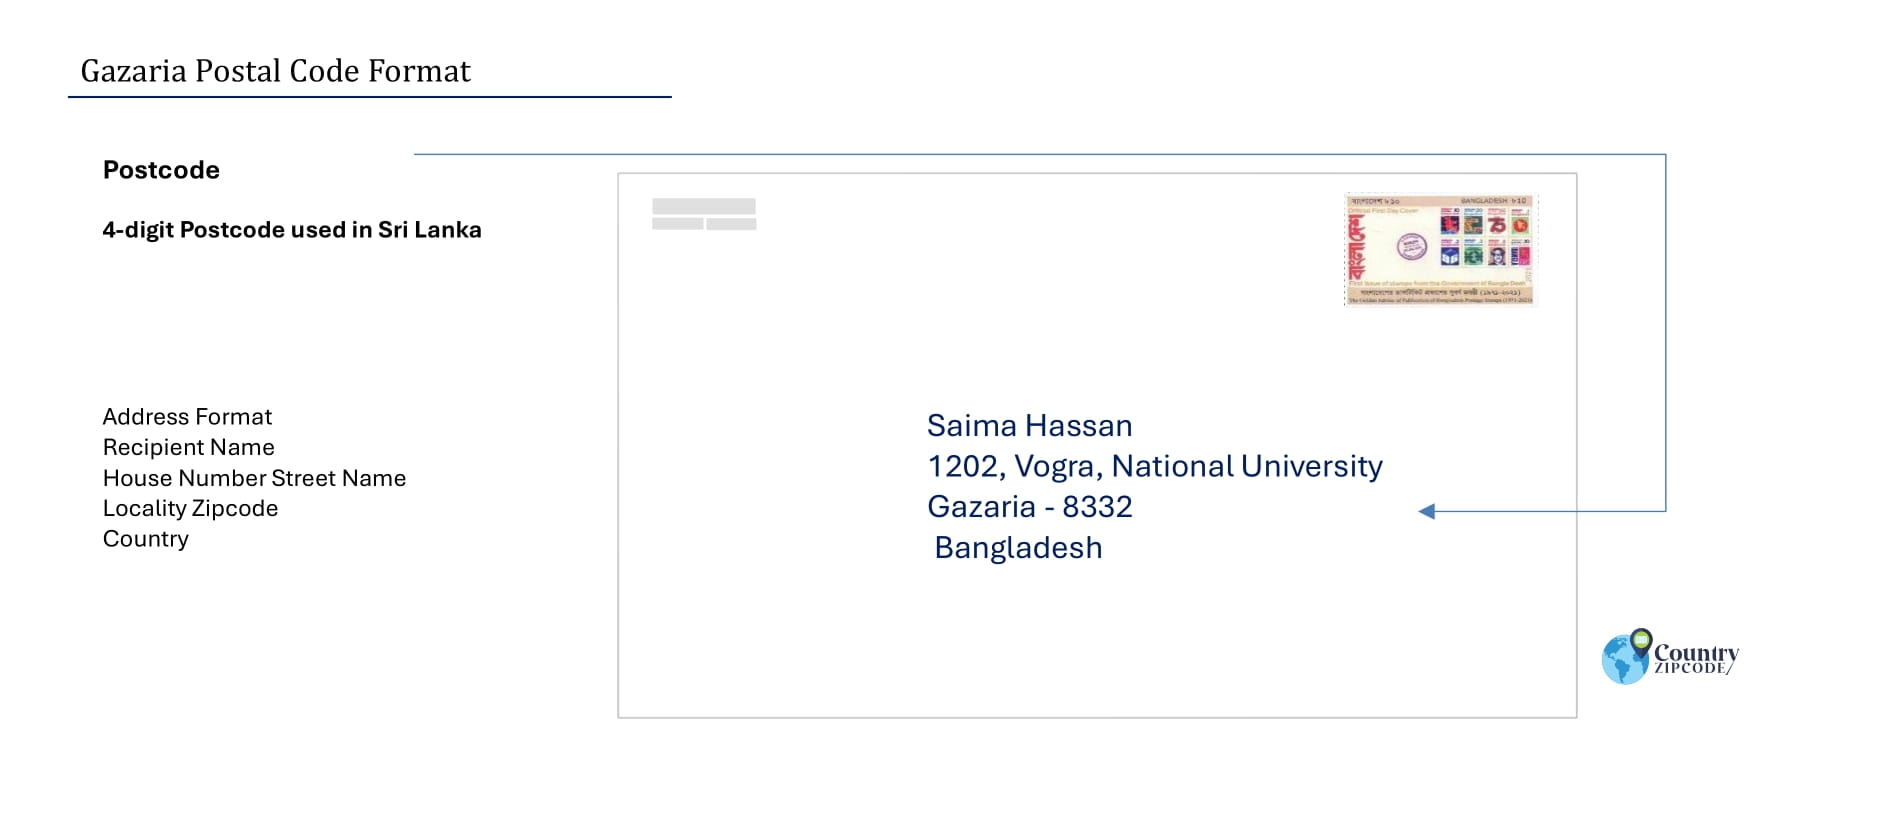 Gazaria Postal code format